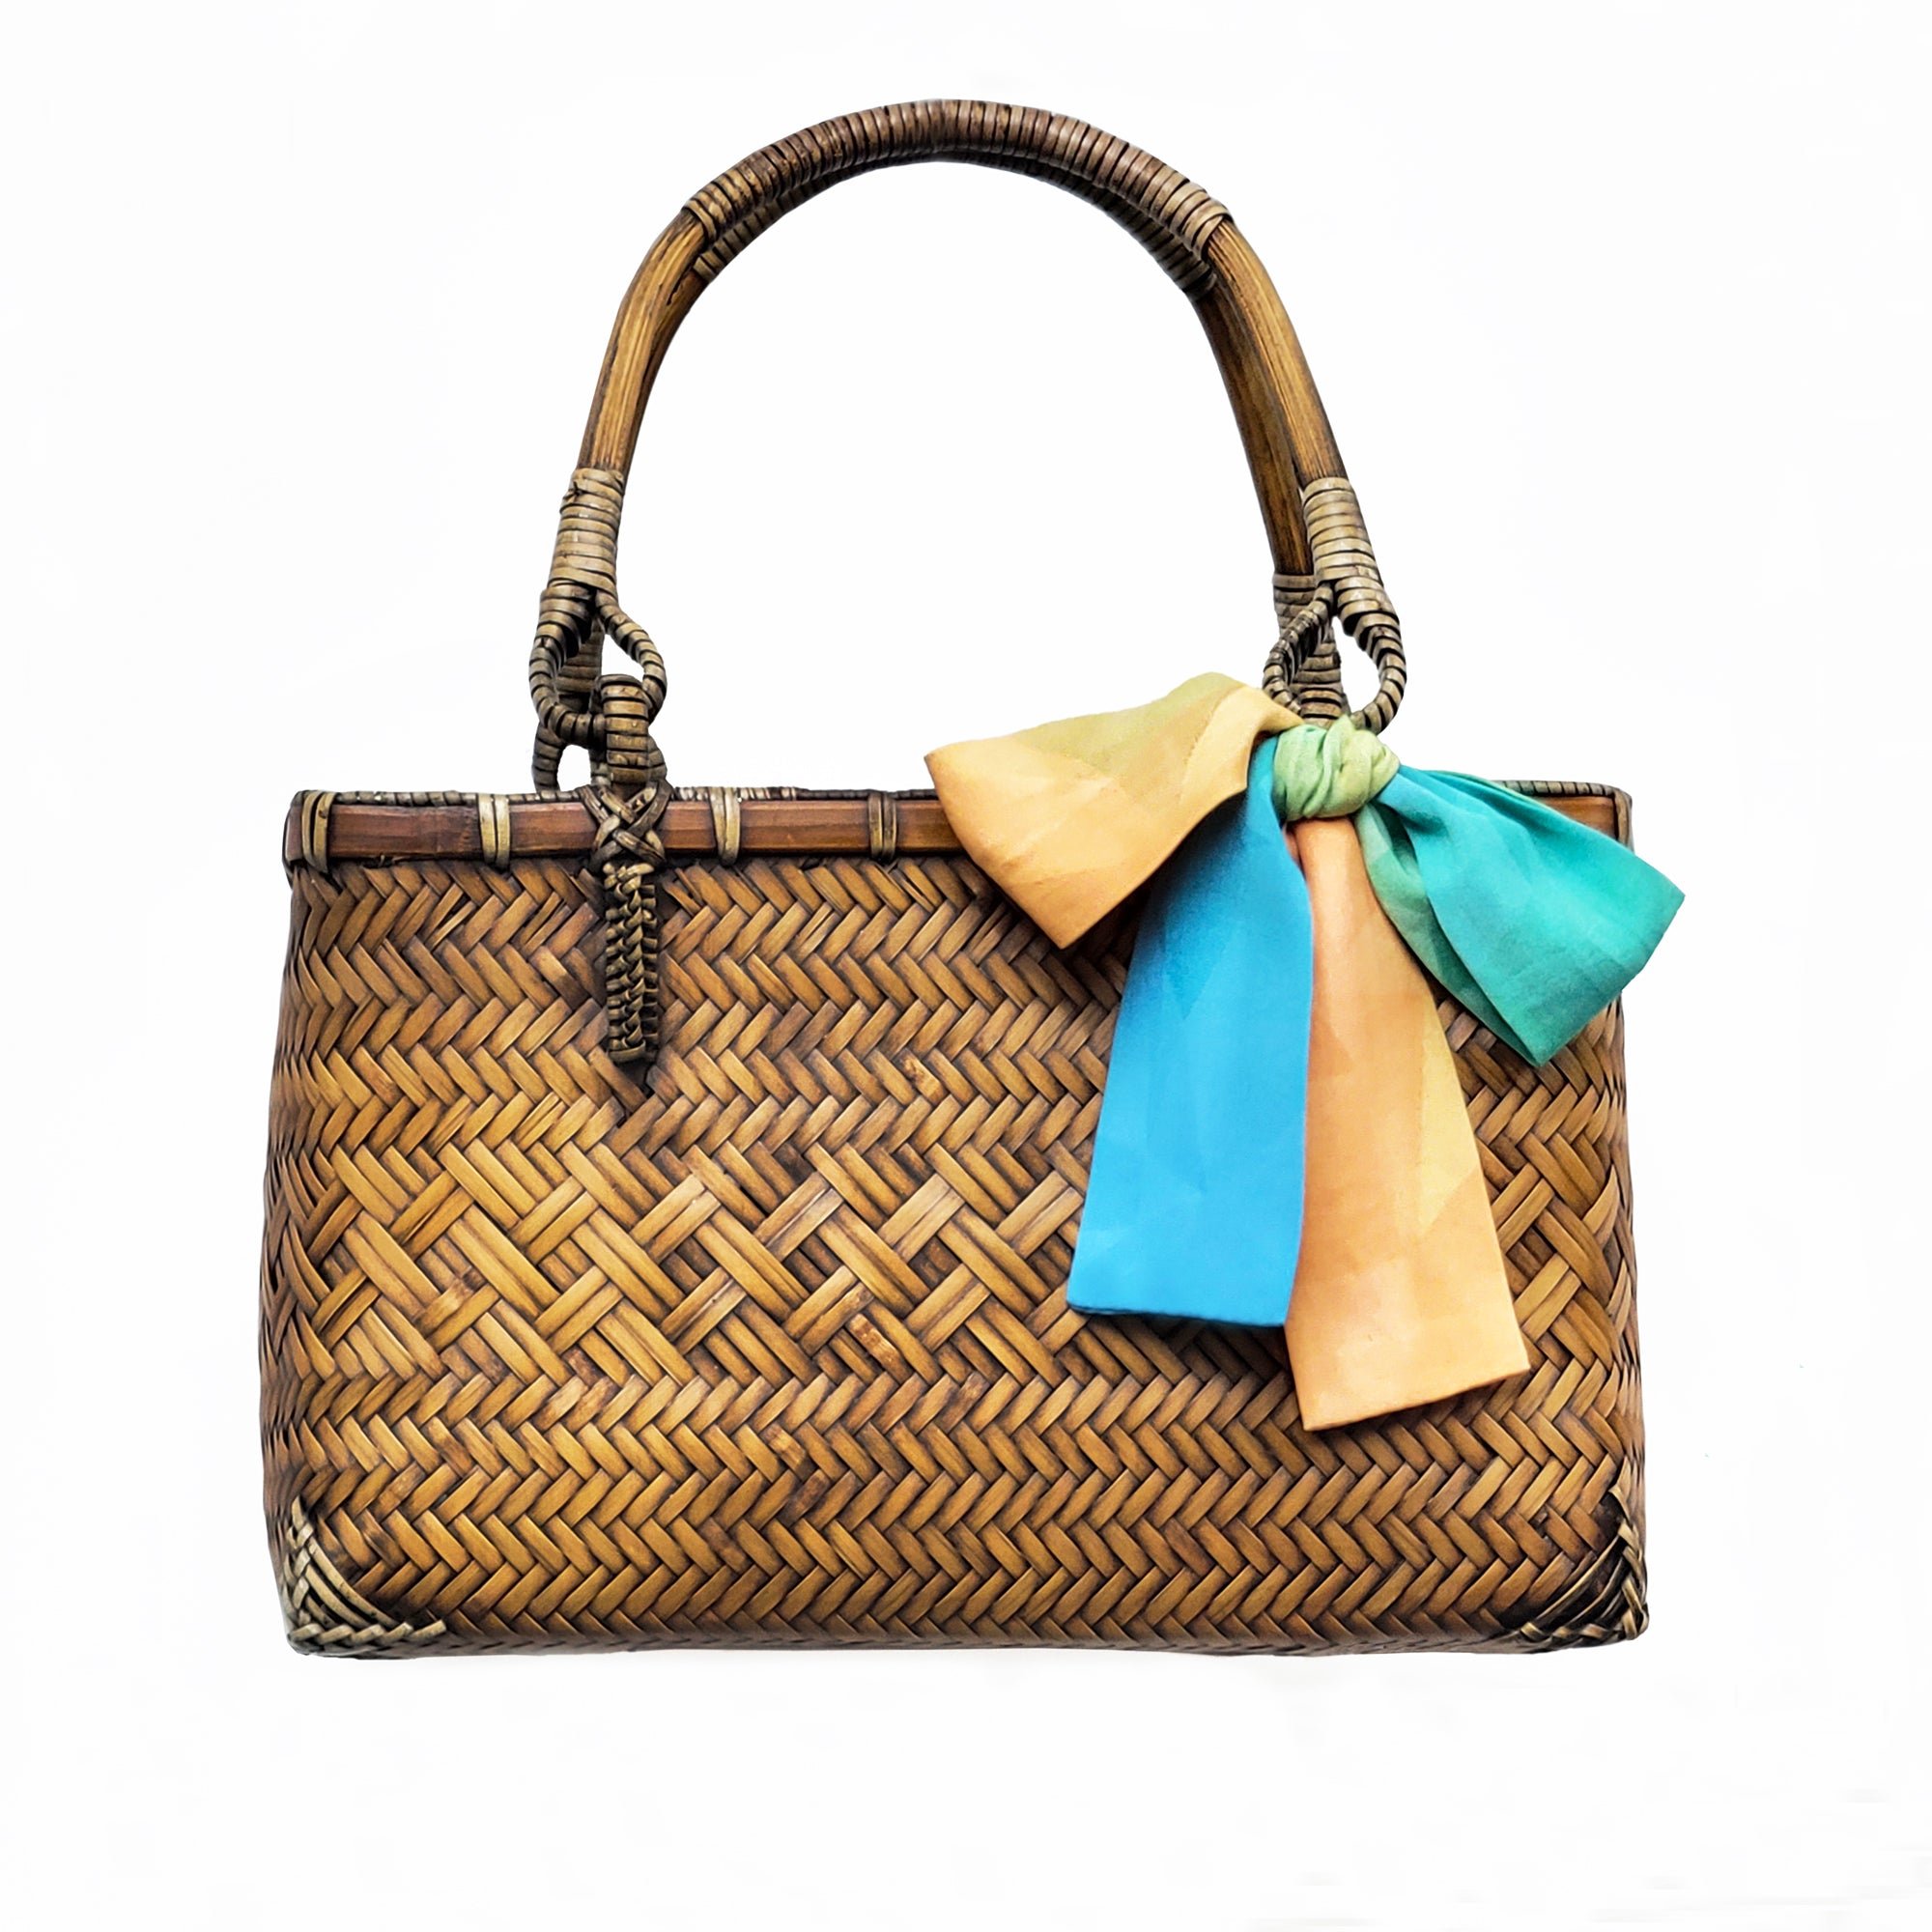 Buy Vintga Bamboo Handbag Handmade Tote Bamboo Purse Straw Beach Bag for  Women (Bamboo Small) at Amazon.in